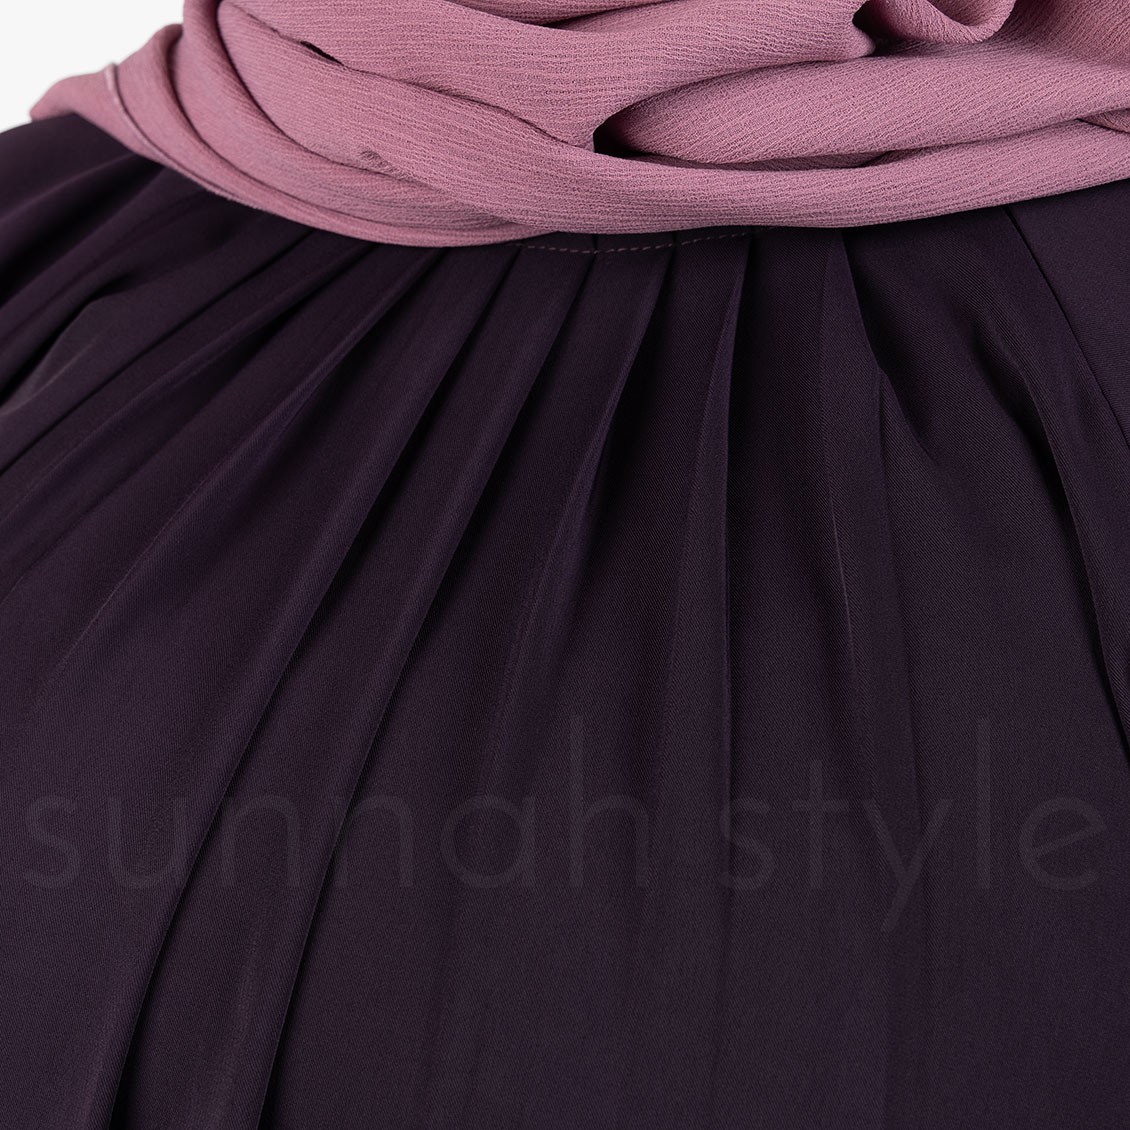 Sunnah Style Simplicity Umbrella Abaya Dark Violet